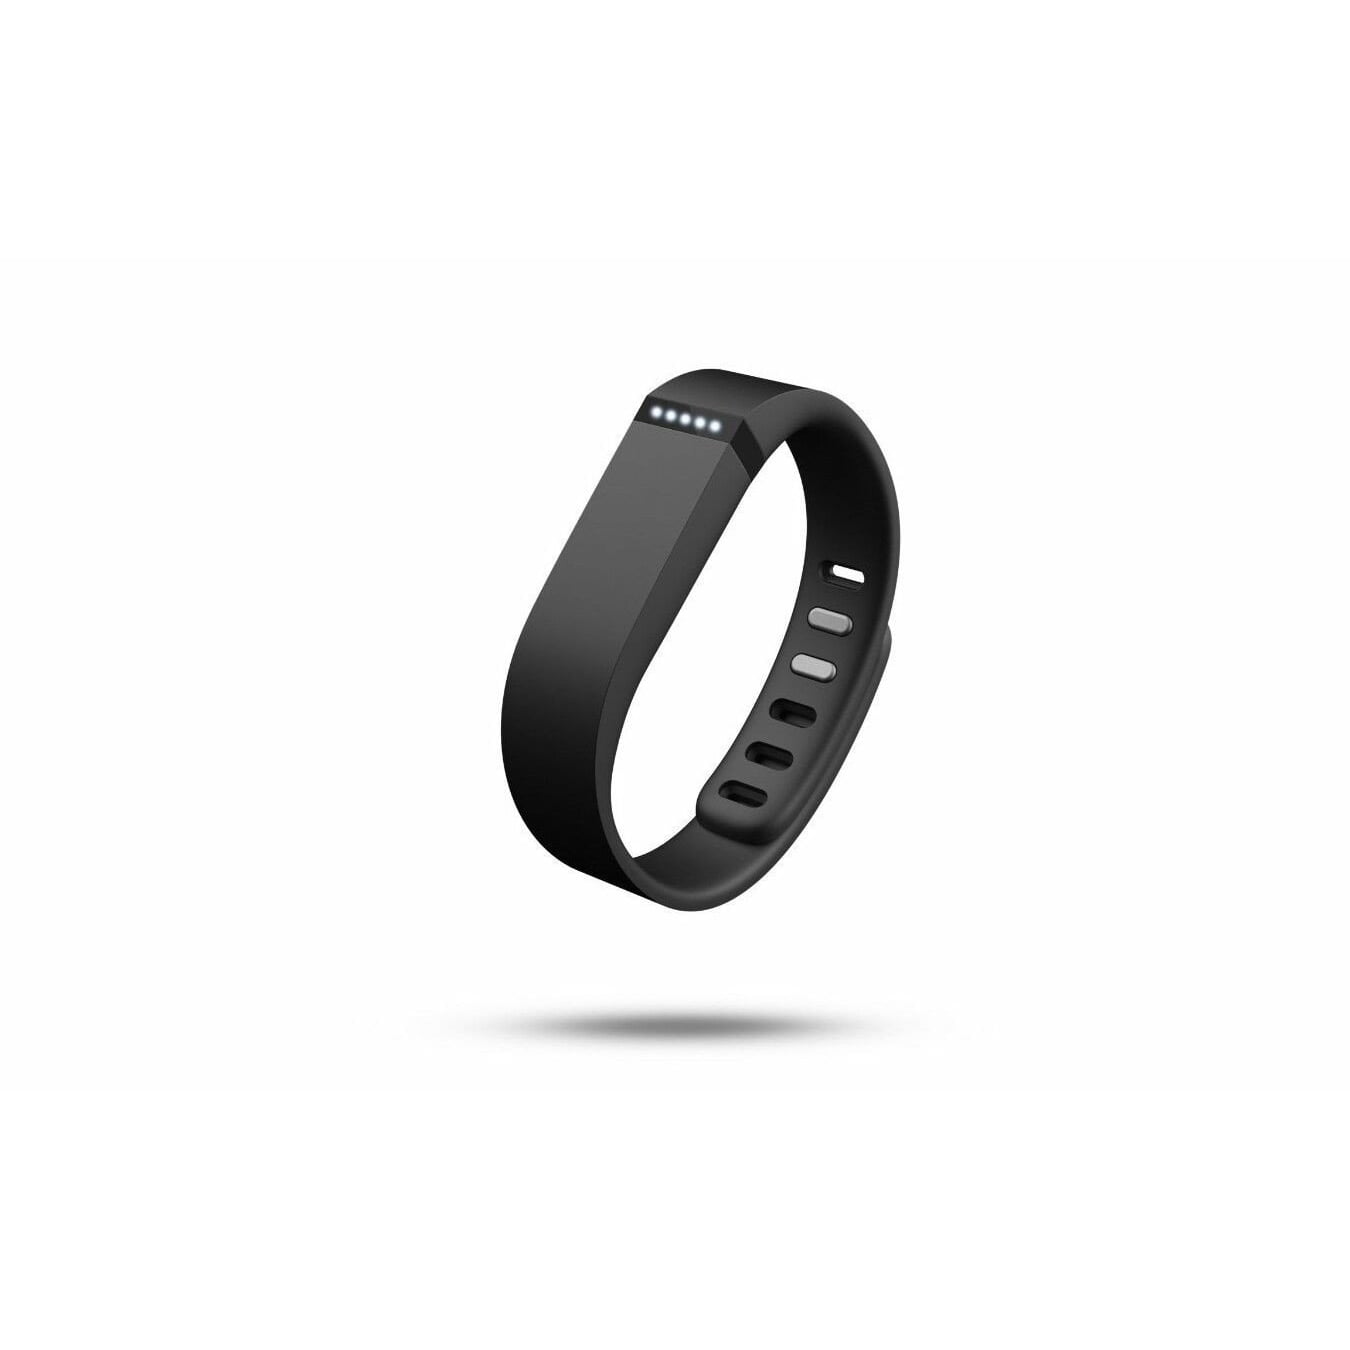 Fitbit Flex Wireless Activity Sleep Wristband Black for sale online 